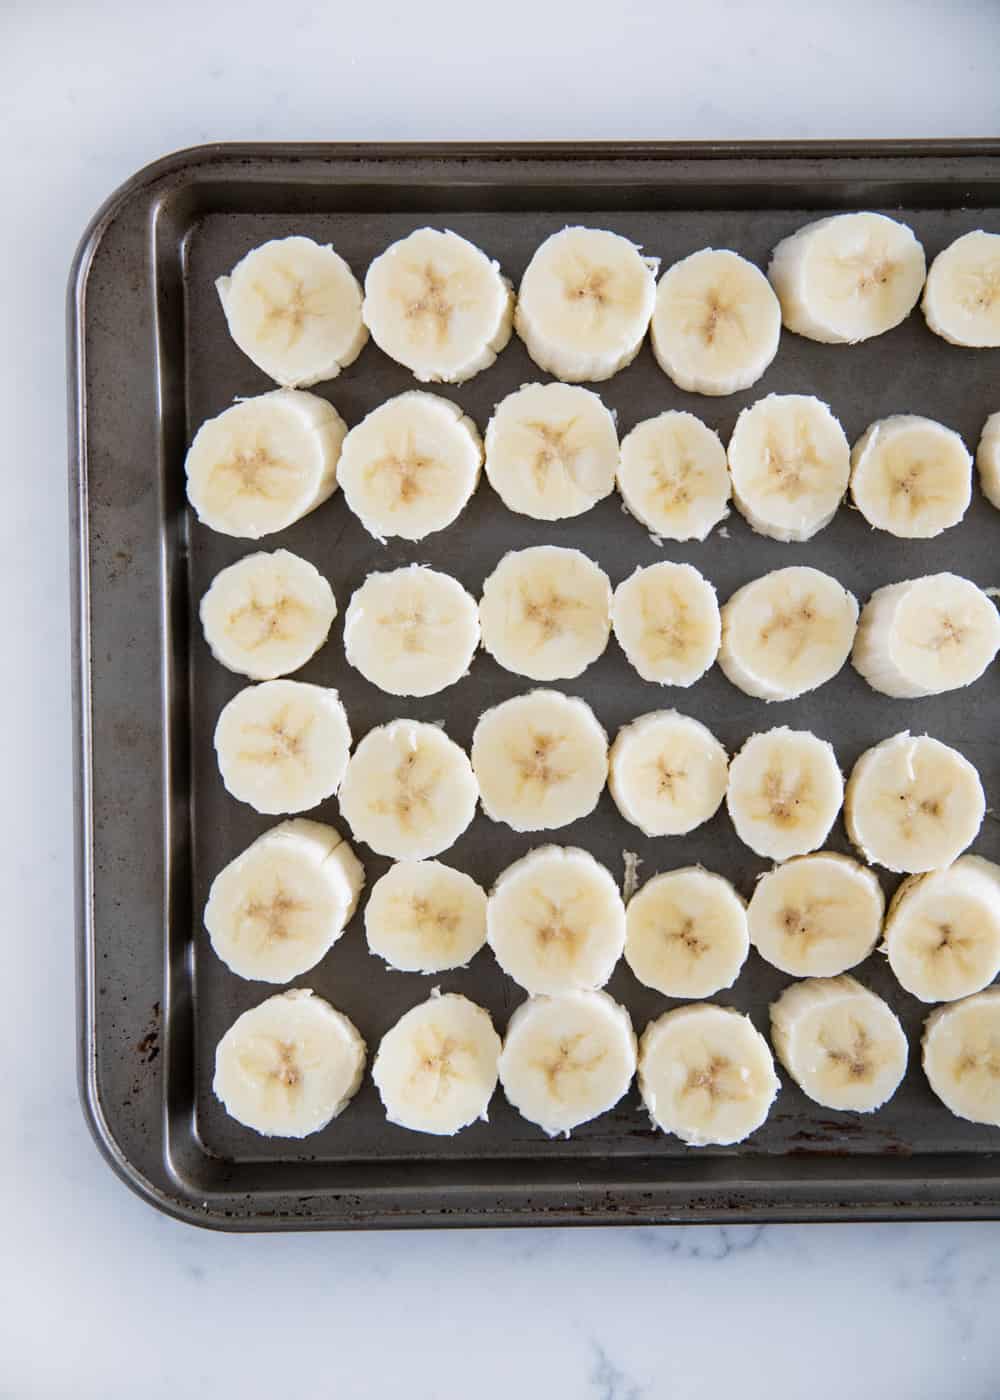 Sliced bananas on baking sheet.